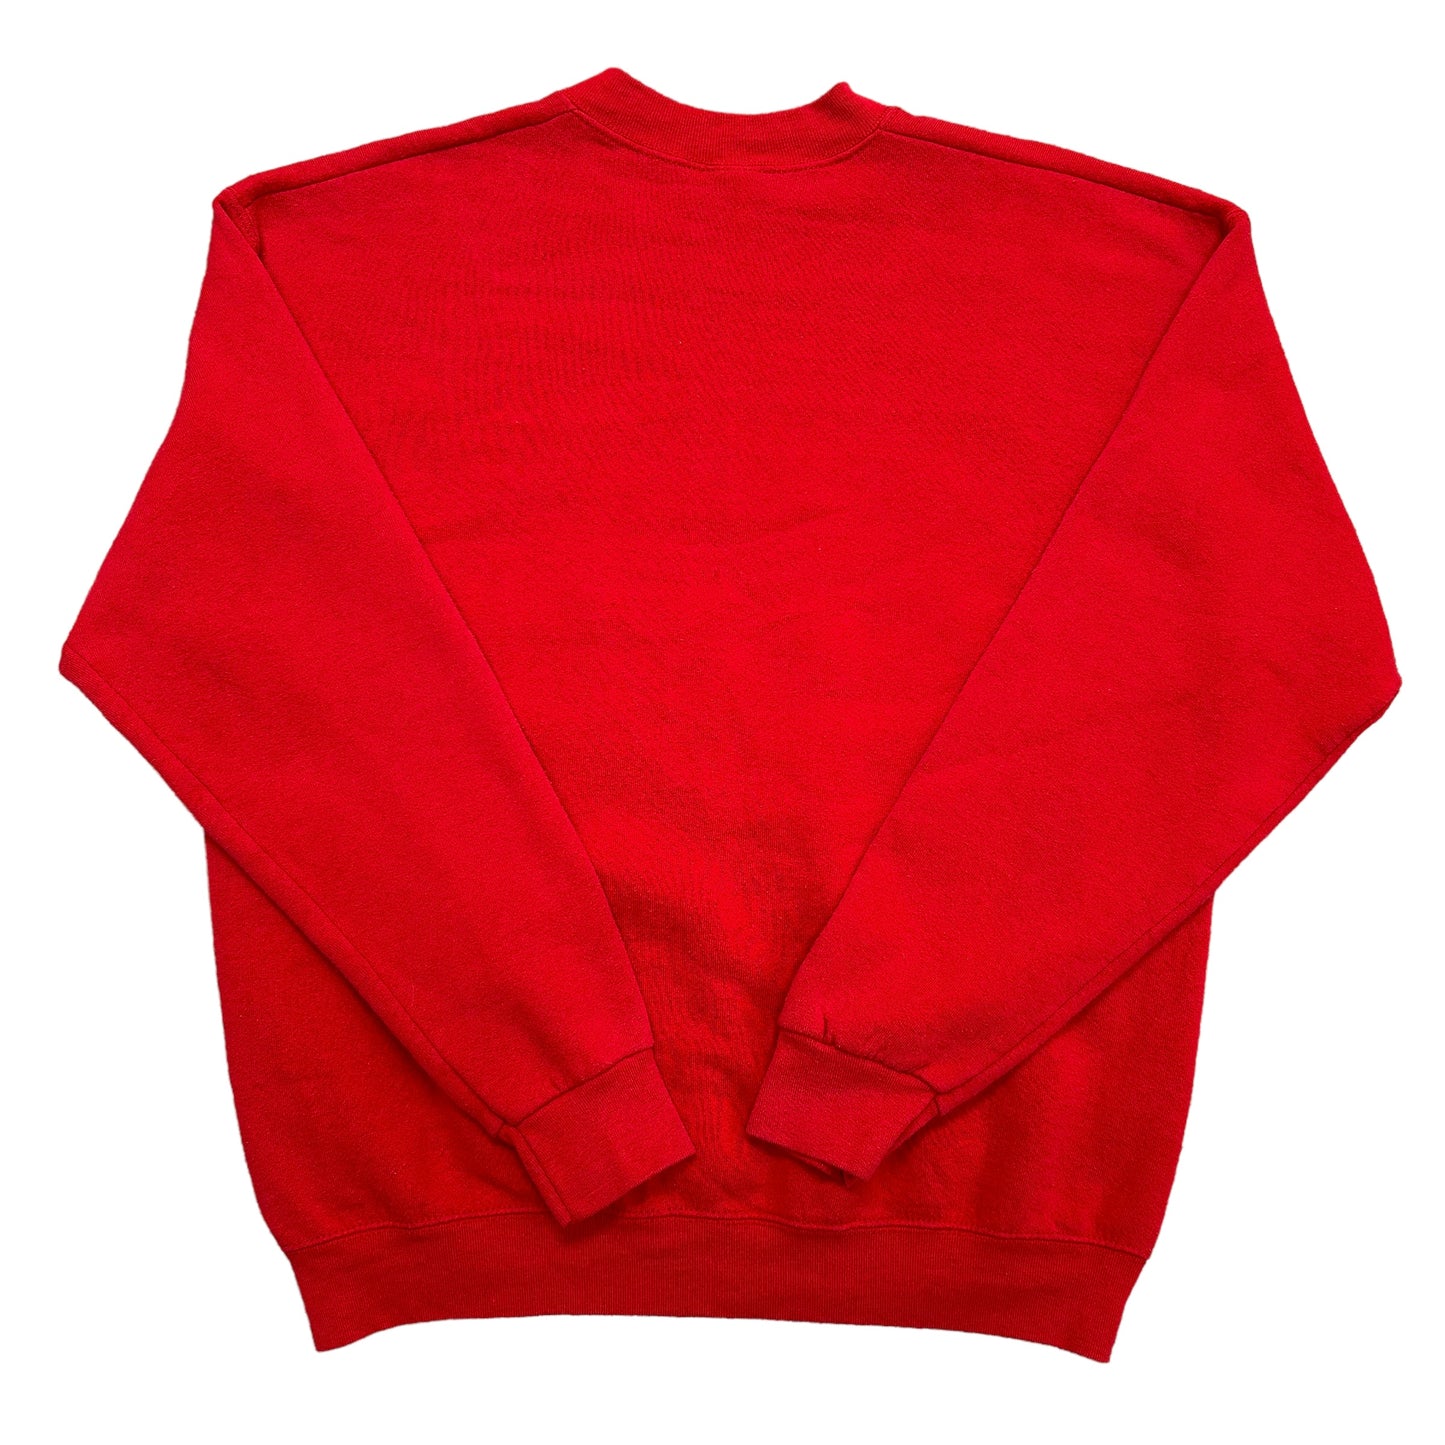 Vintage 1990s Nebraska Cornhuskers Red Crewneck Sweatshirt - Size Large